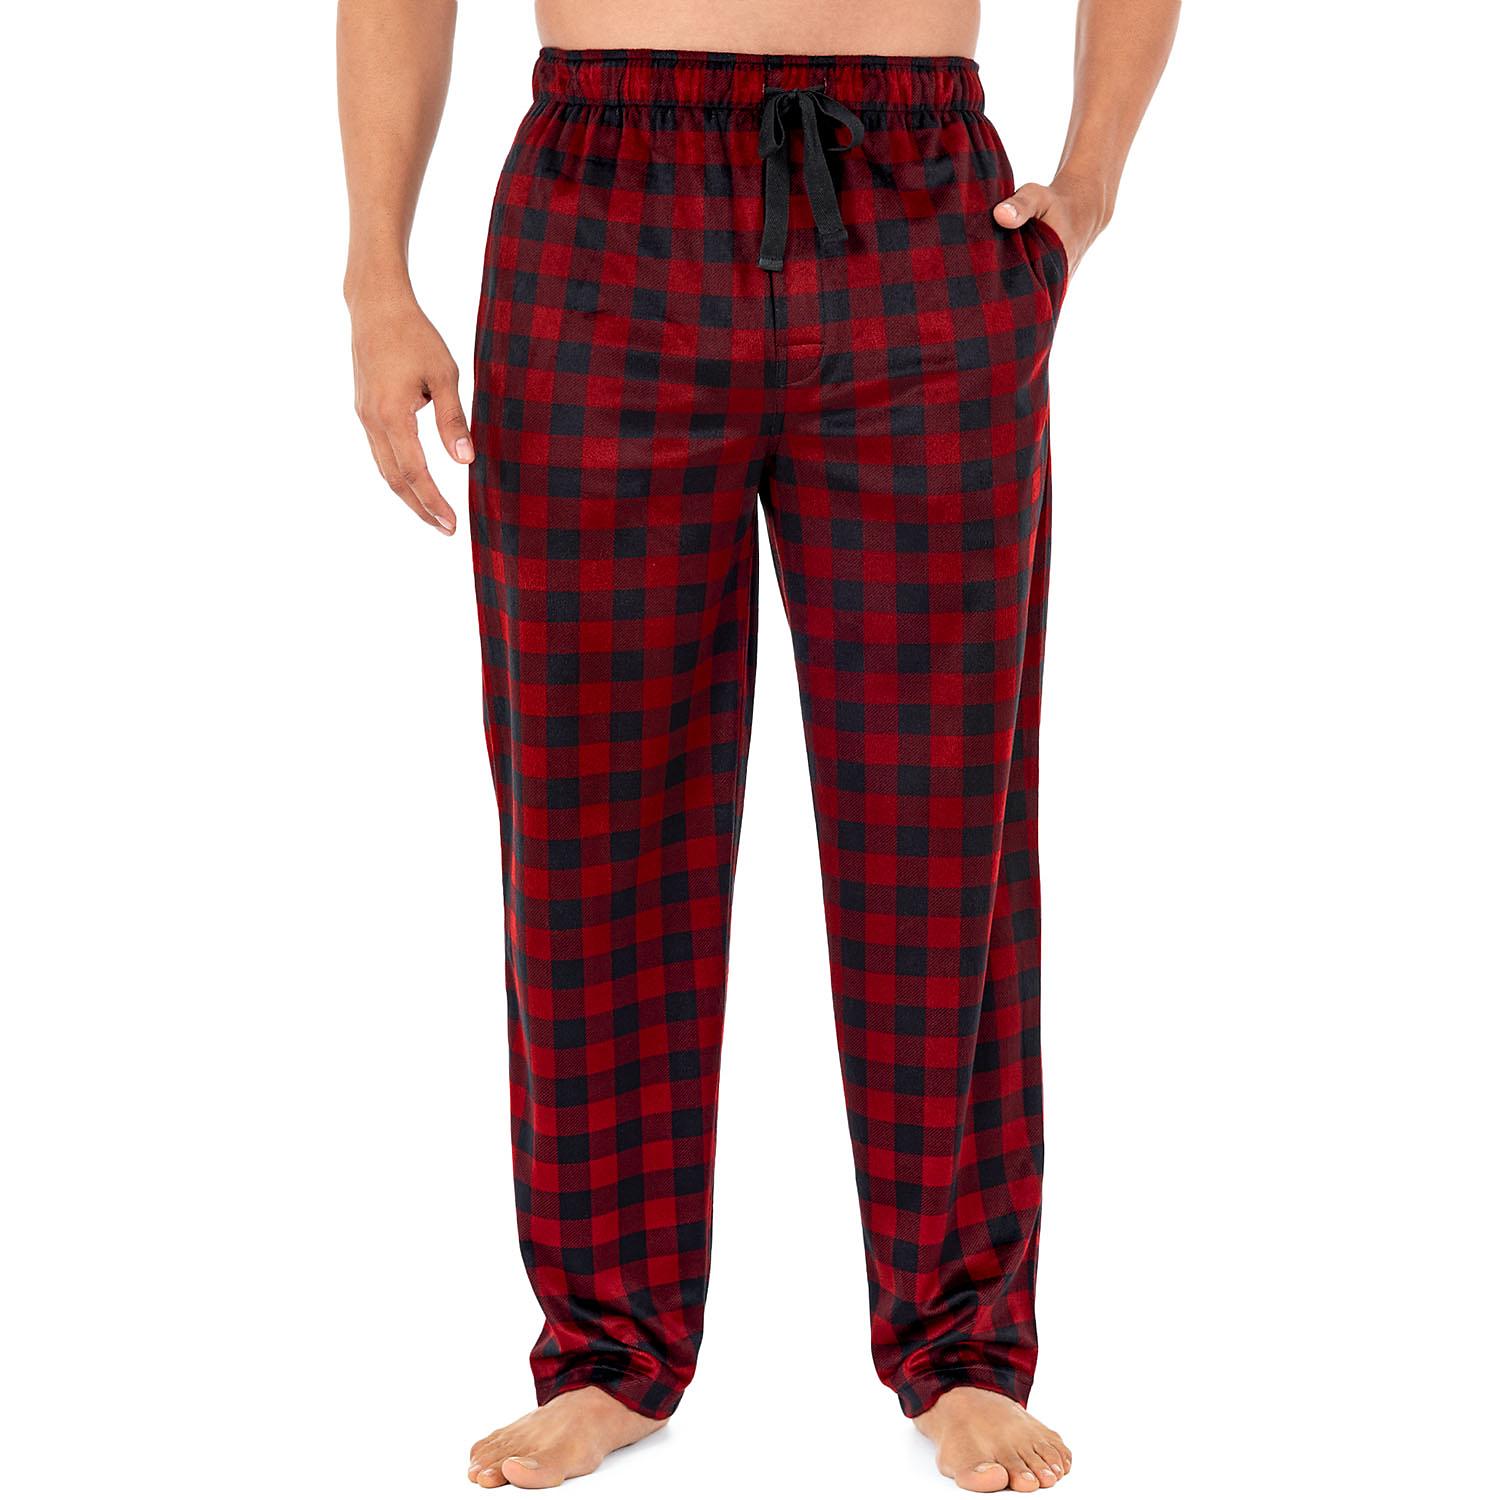 Izod Men's Micro Fleece Pajama Pant in Red, Size Medium - image 1 of 2